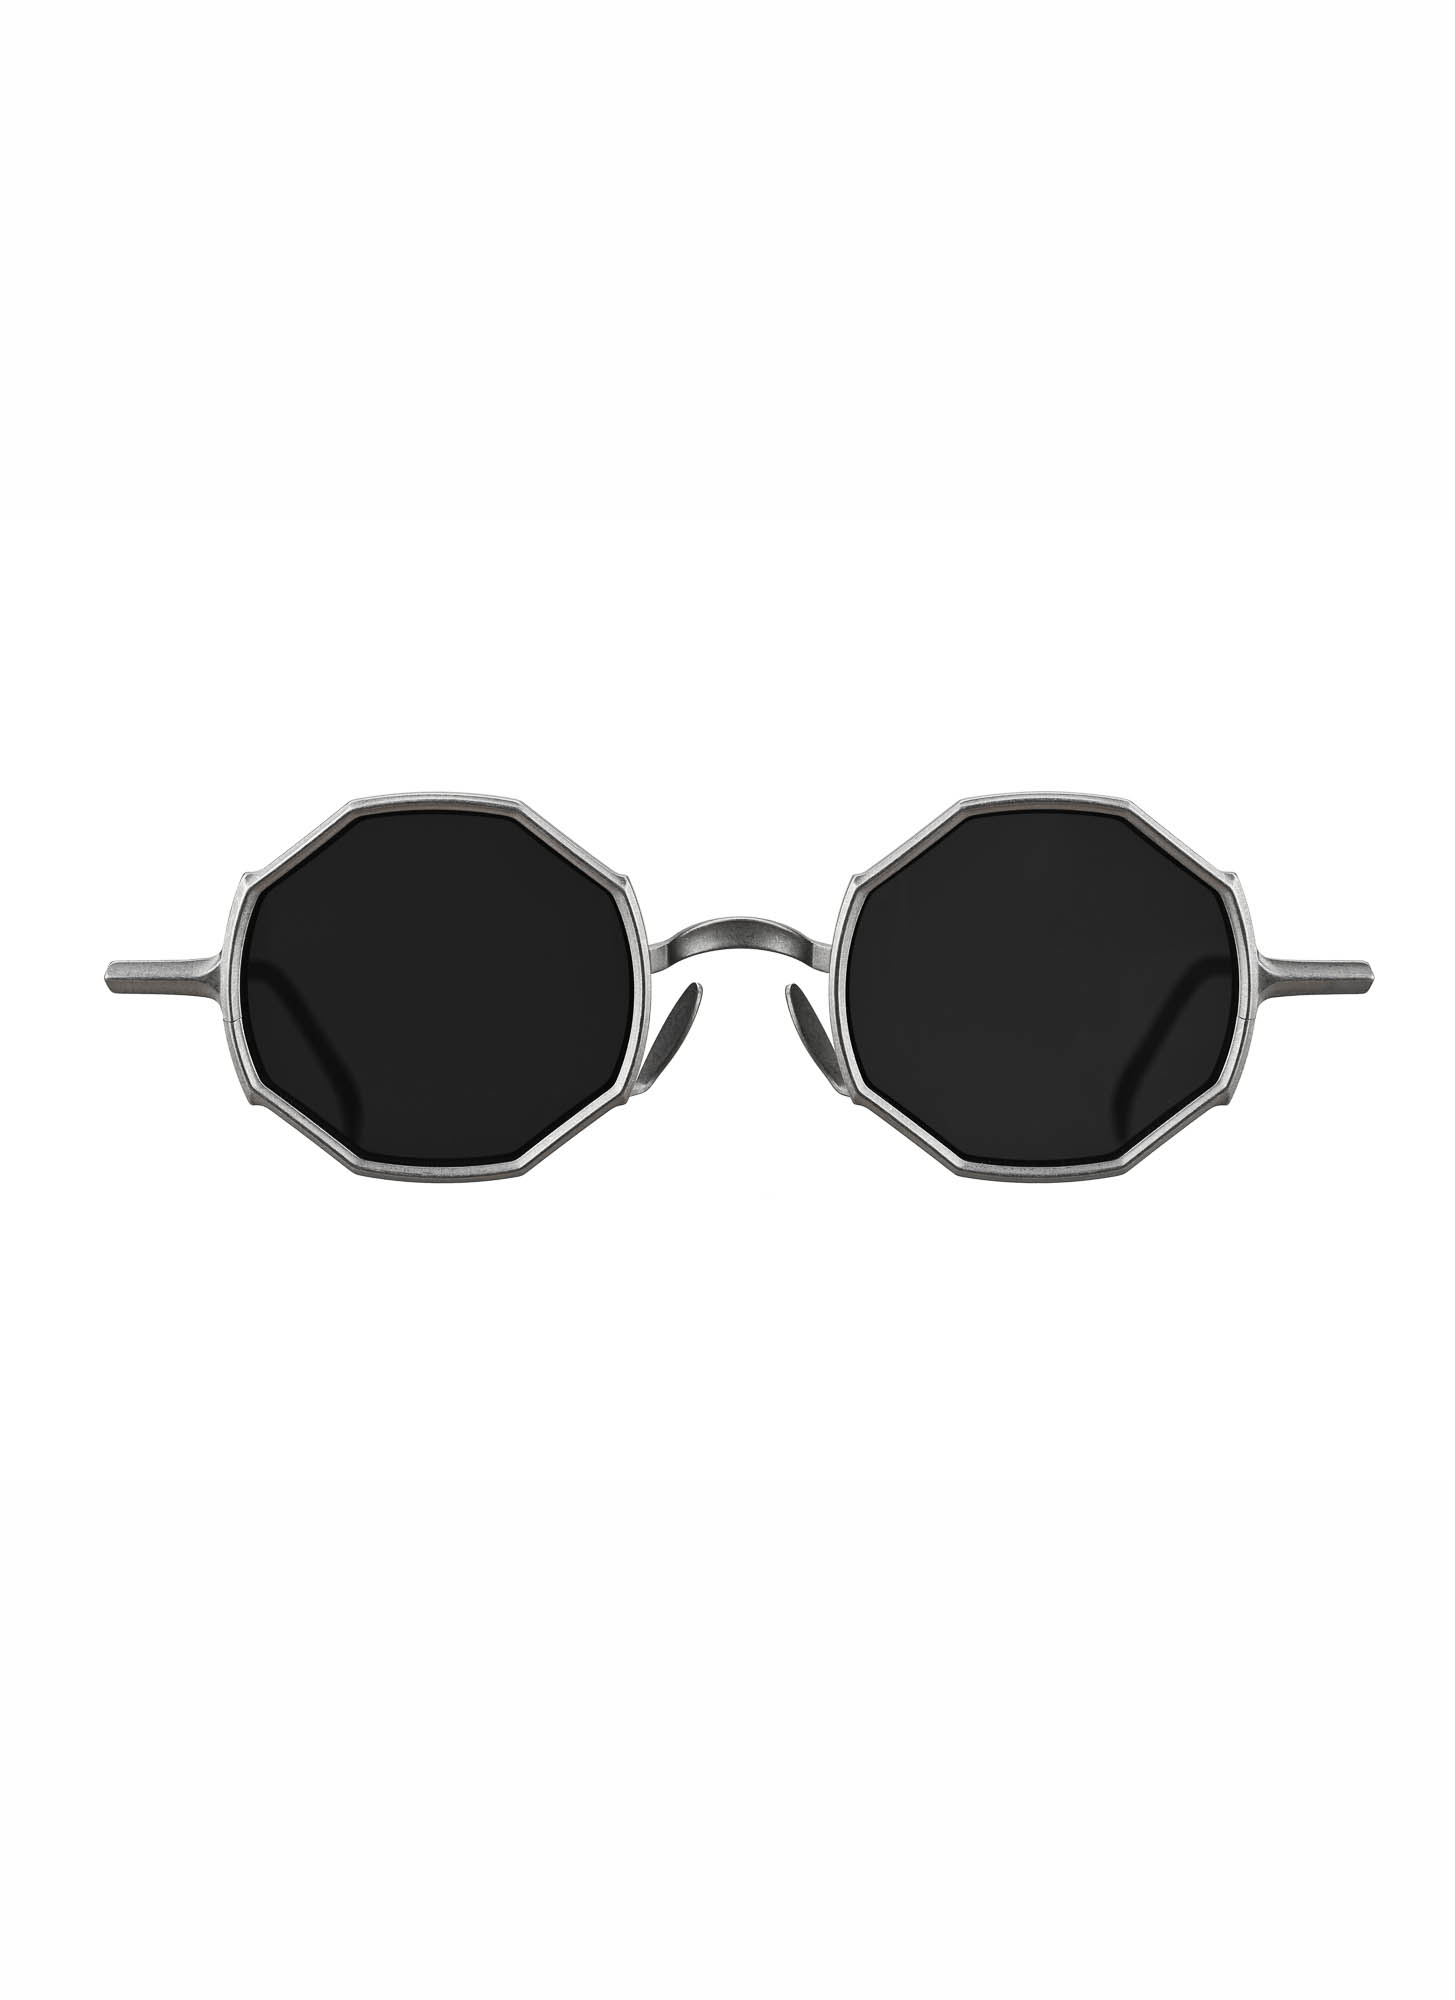 hide-m | RIGARDS sunglasses RG0088ST vintage black dark grey lens